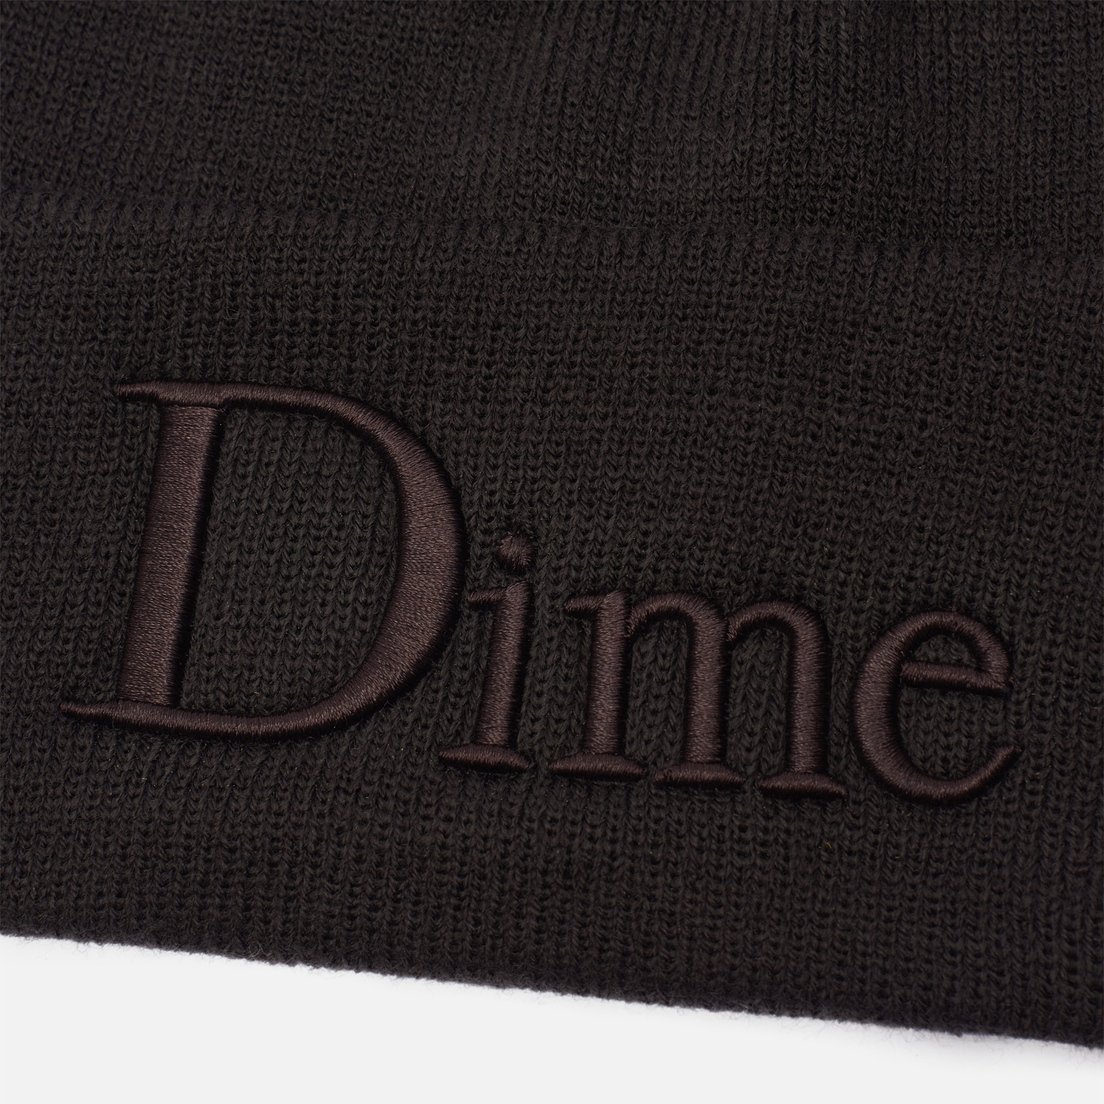 Dime Шапка Dime Classic 3D Logo